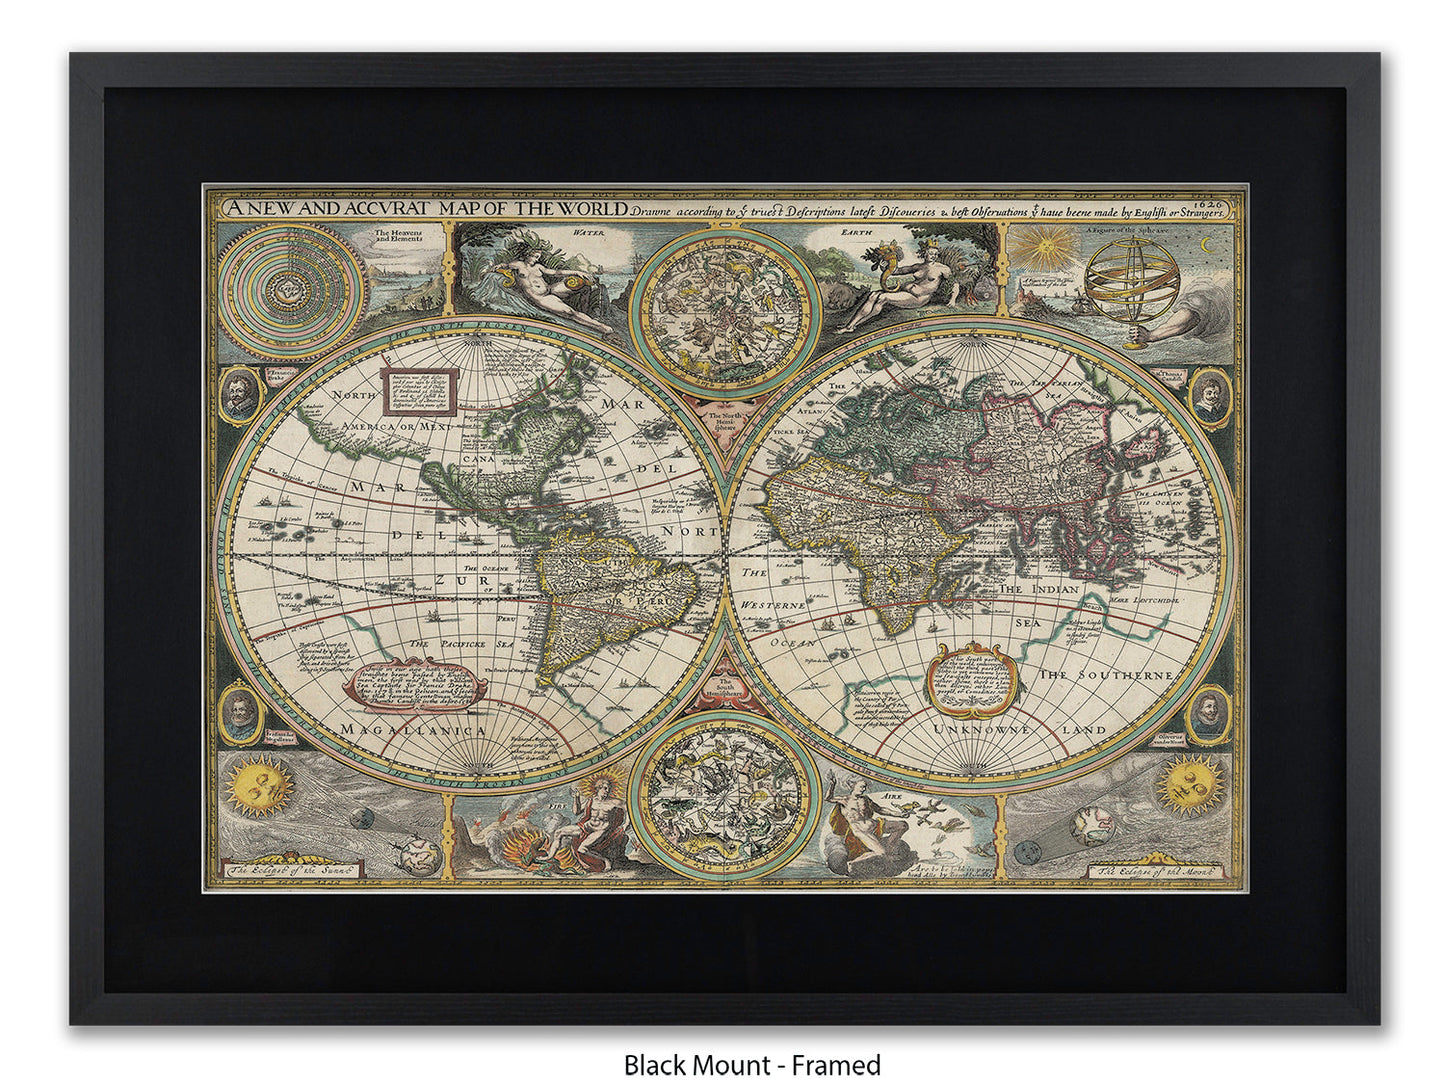 Antique Accvrat 1626 World Map Vintage Poster